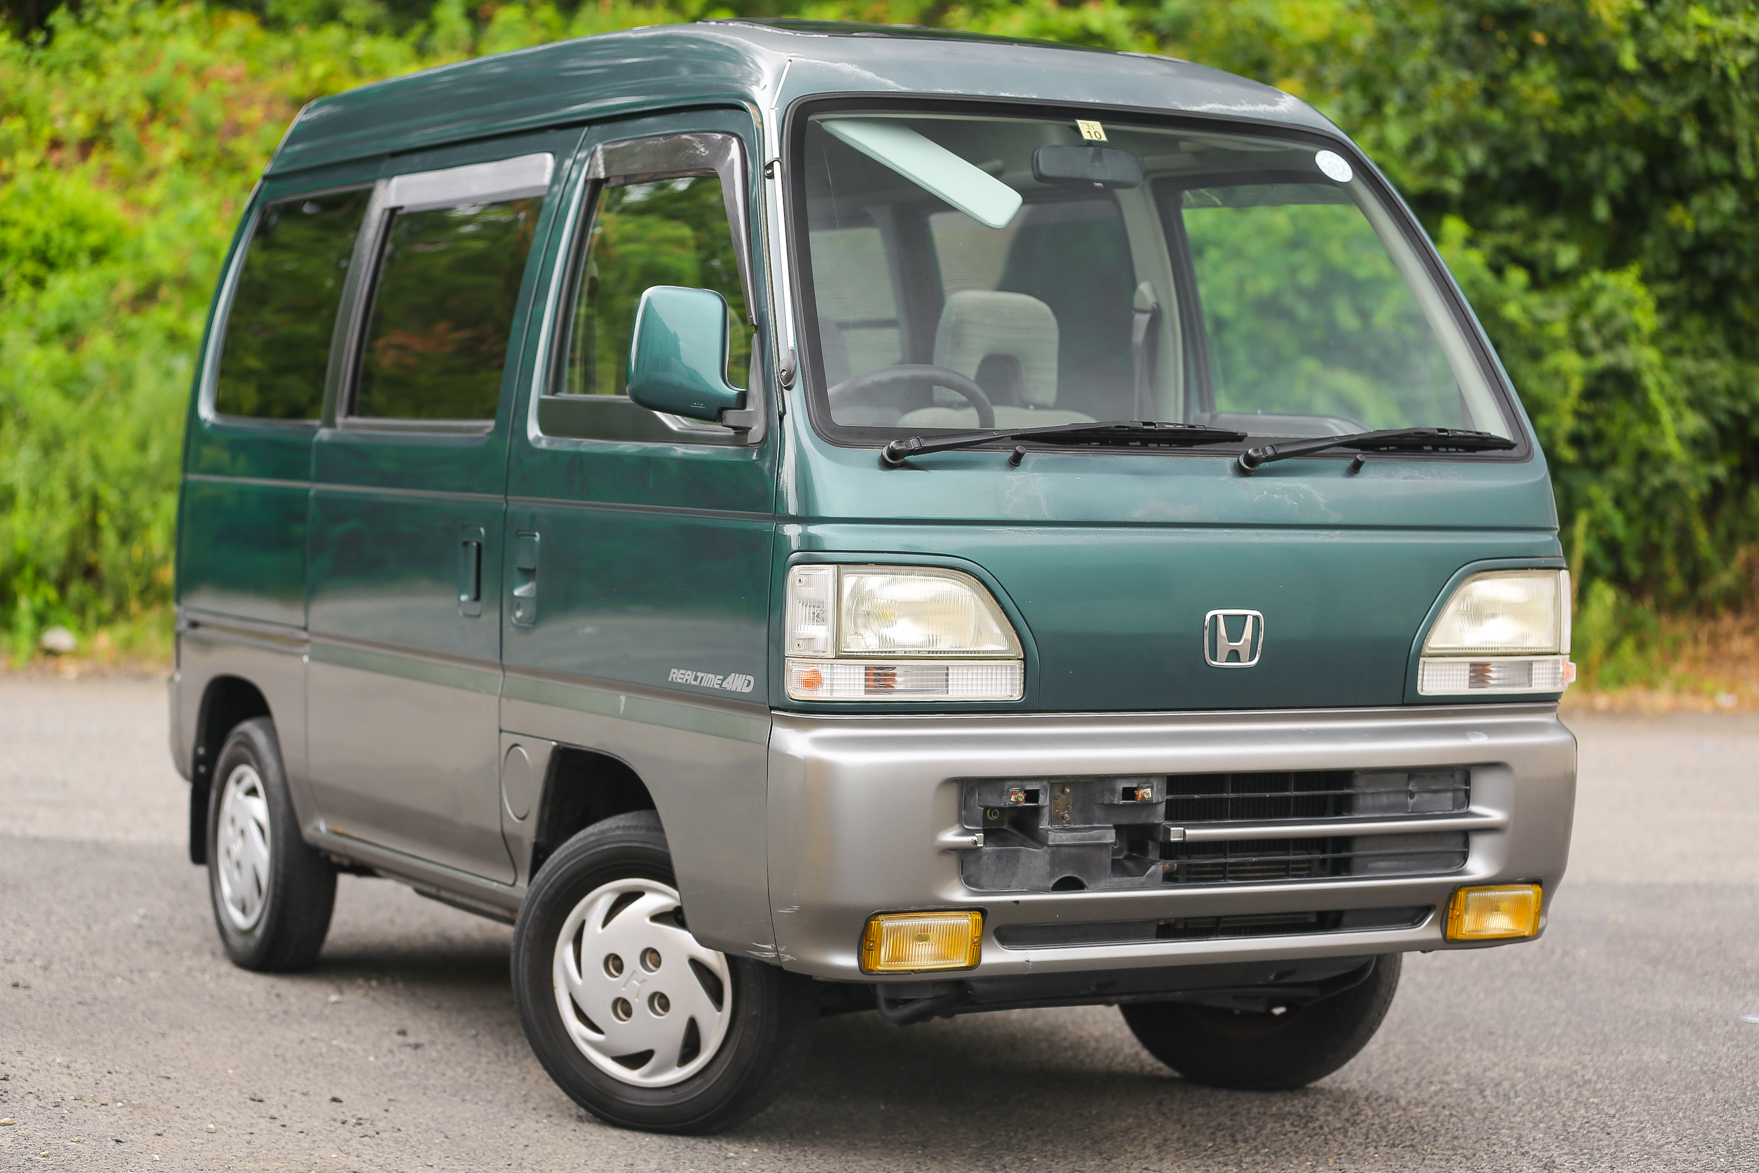 1997 Honda Street Van - $12,500